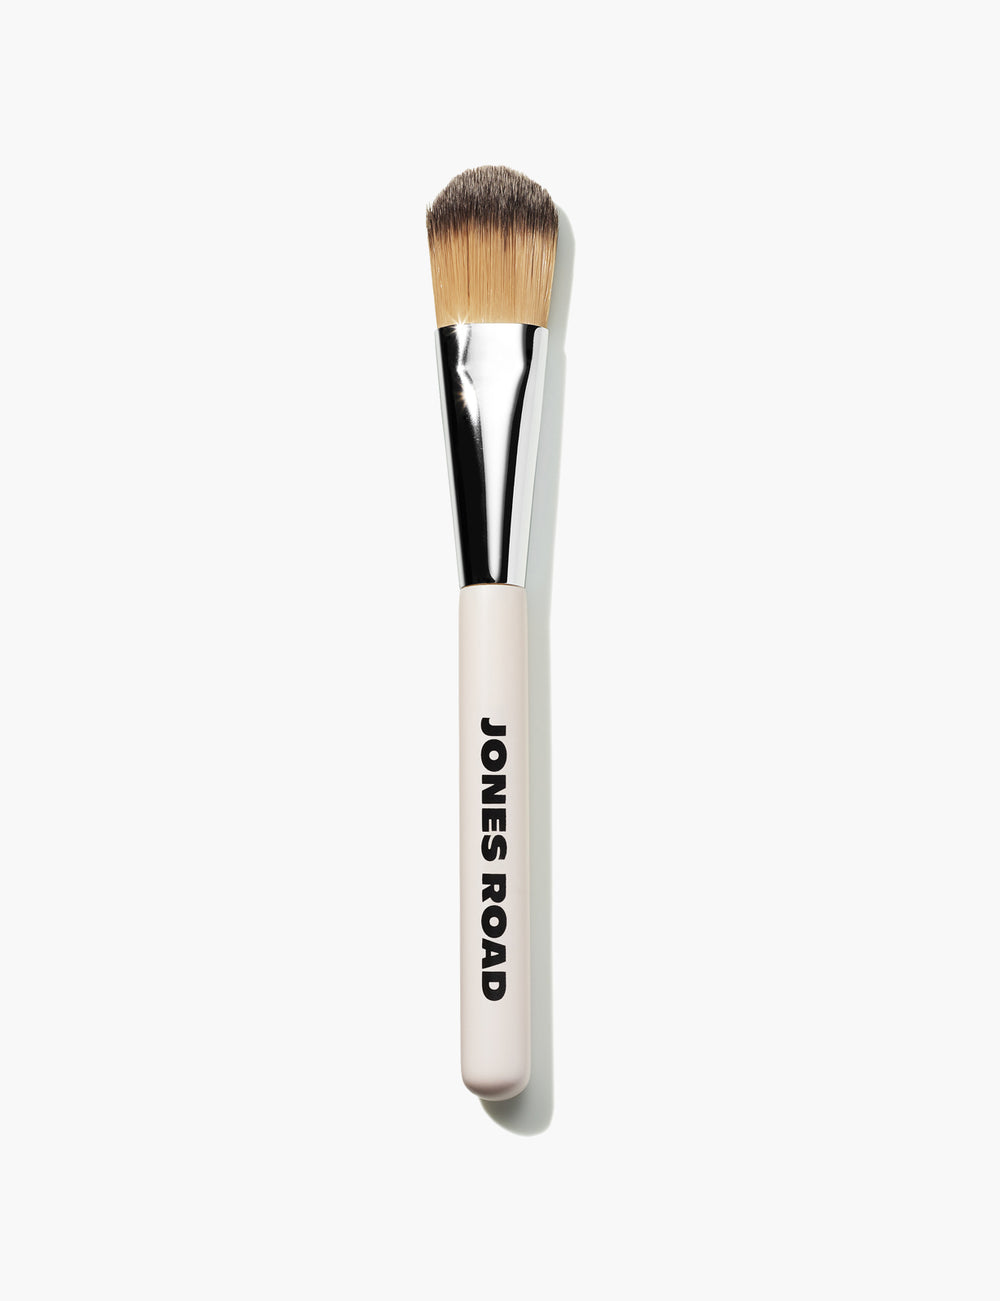 The Skin Brush by Jones Road Beauty